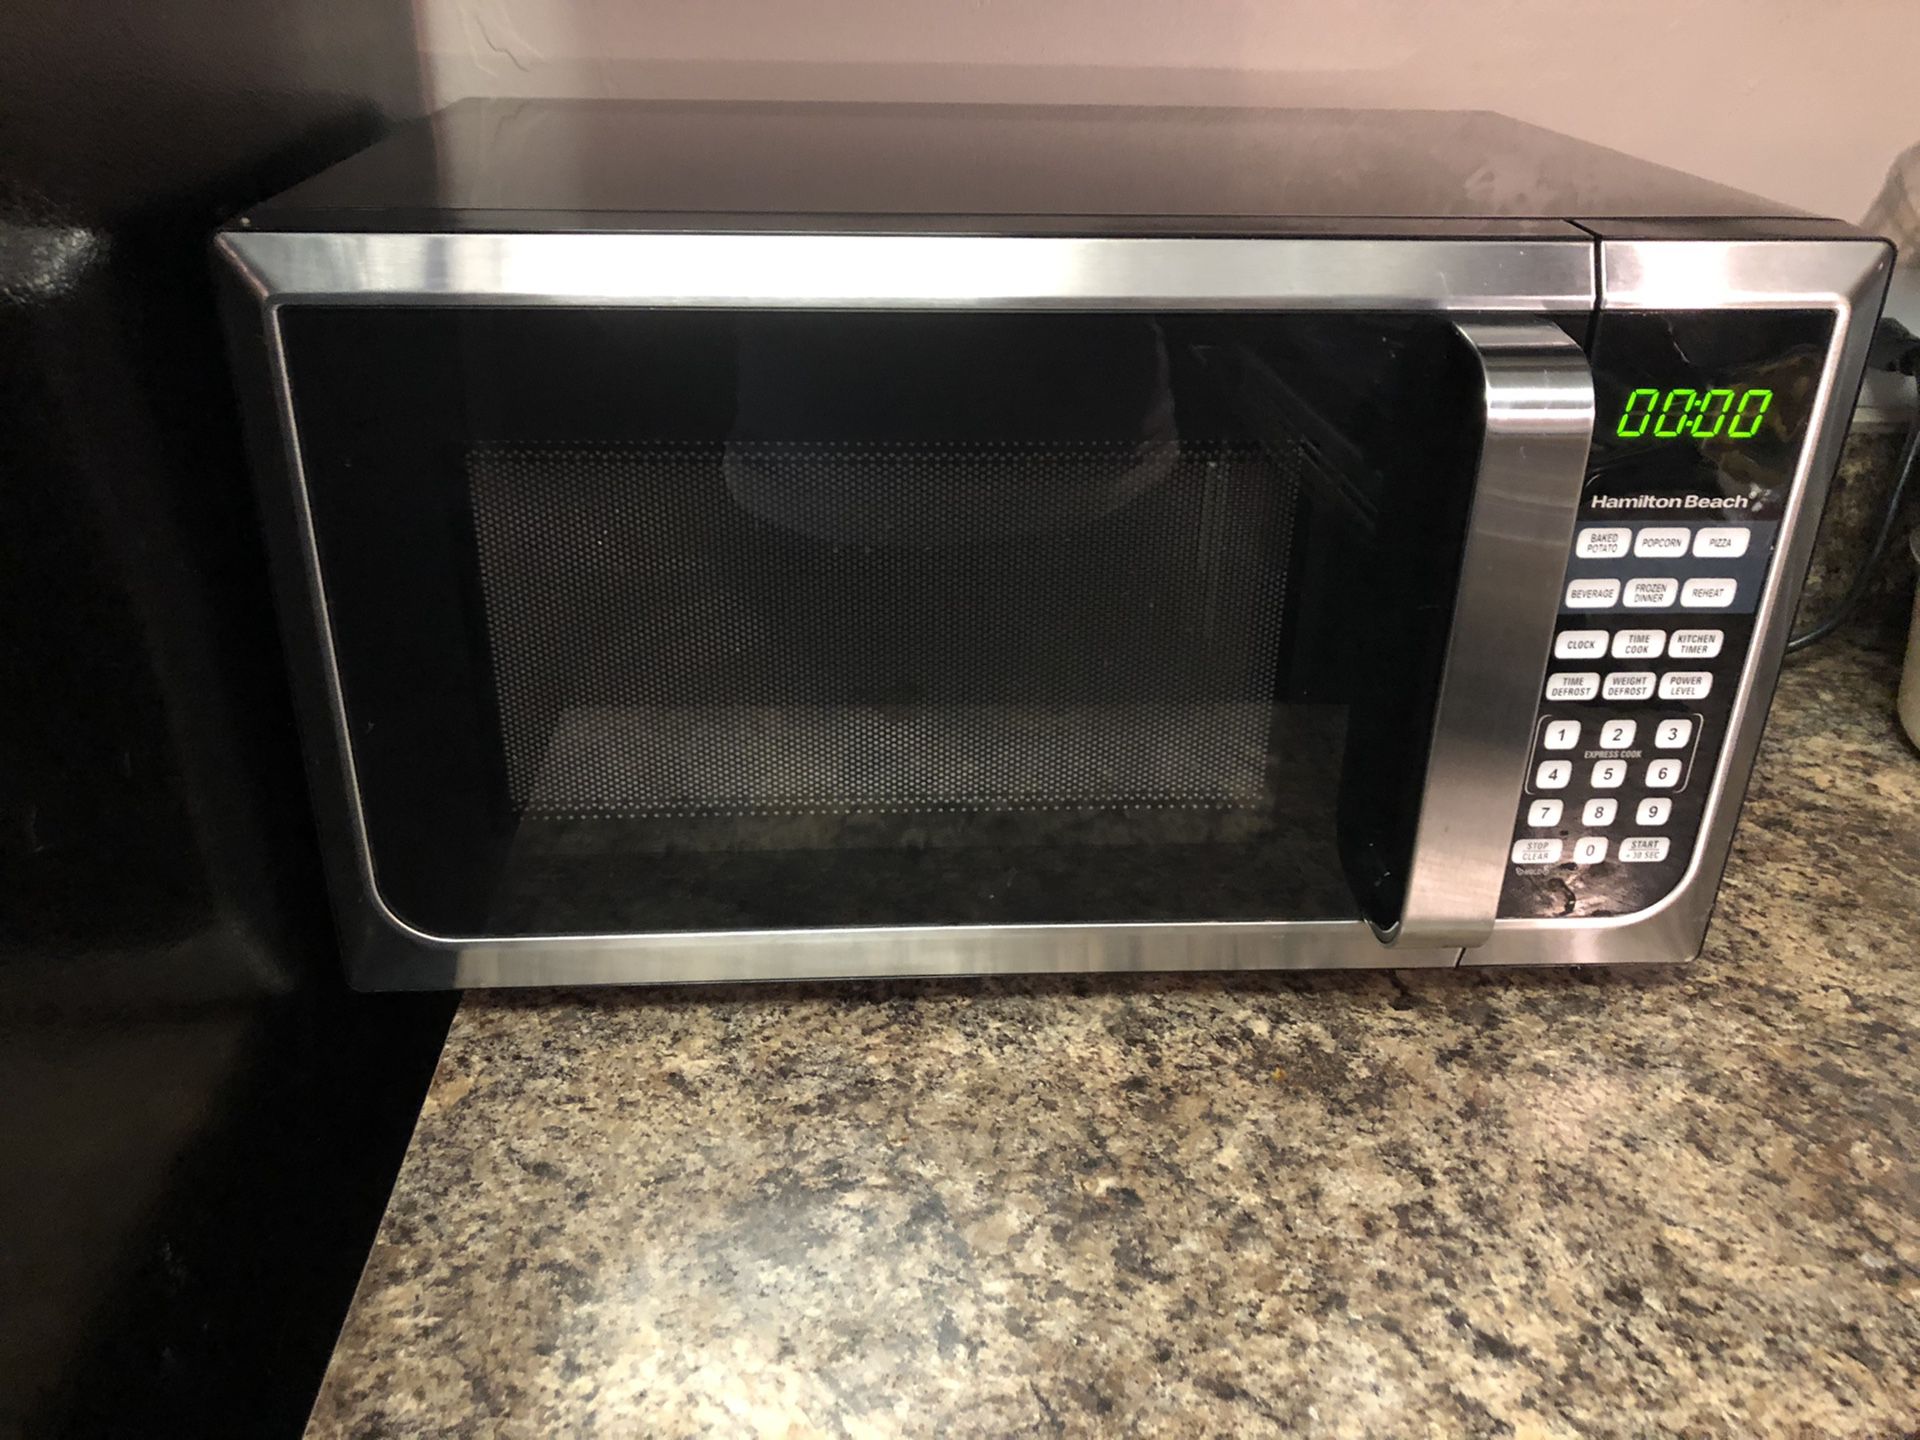 Hamilton Beach stainless steel countertop microwave